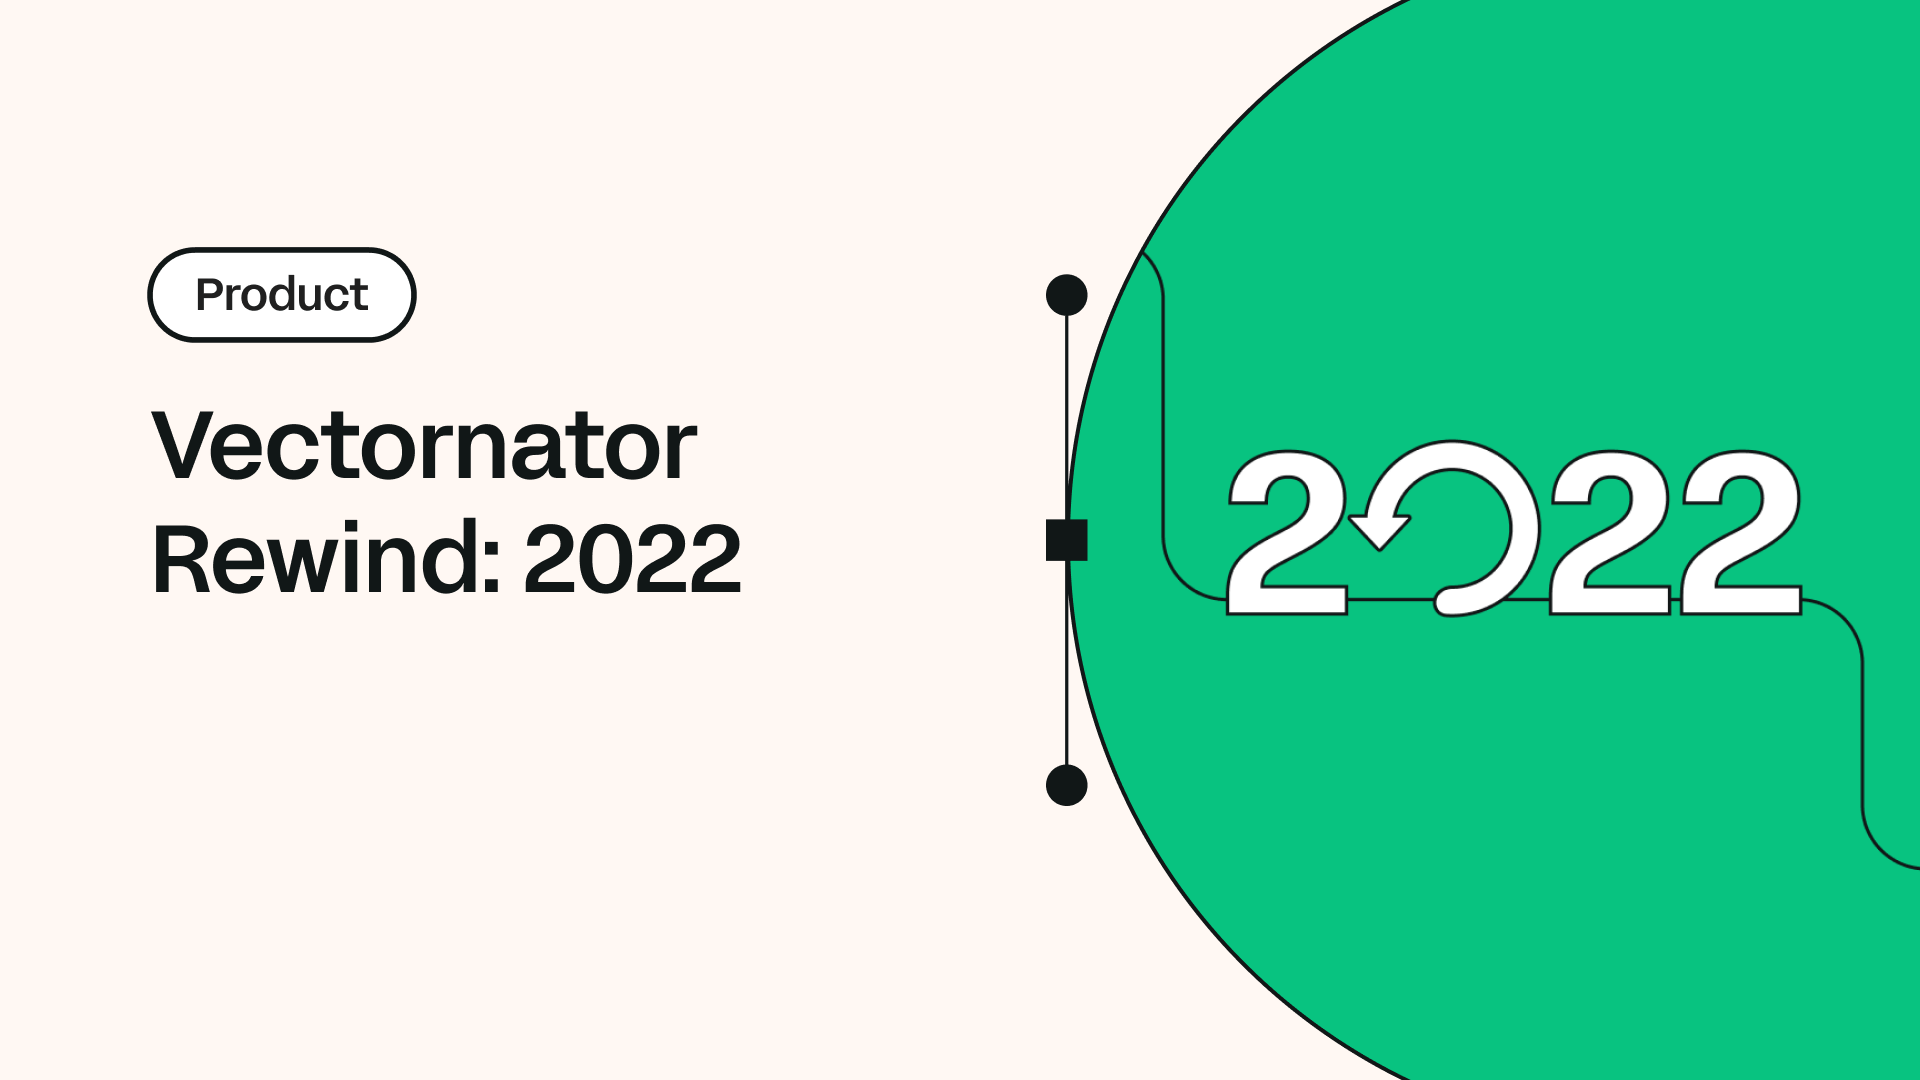 Vectornator rewind: 2022 | Linearity